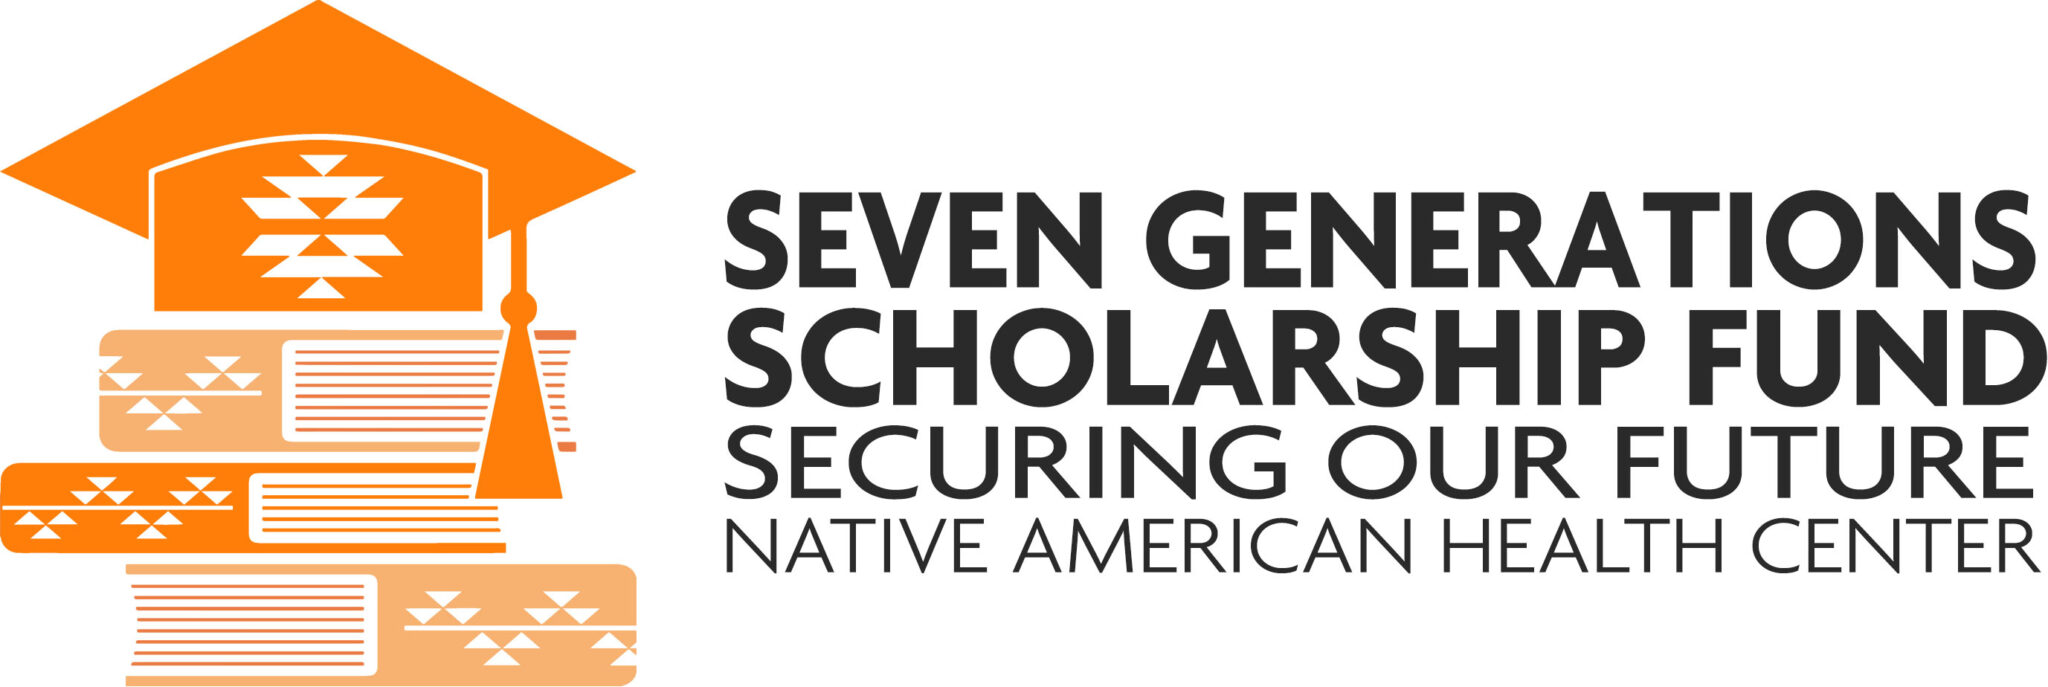 Seven Generations Scholarship Fund Native American Health Center